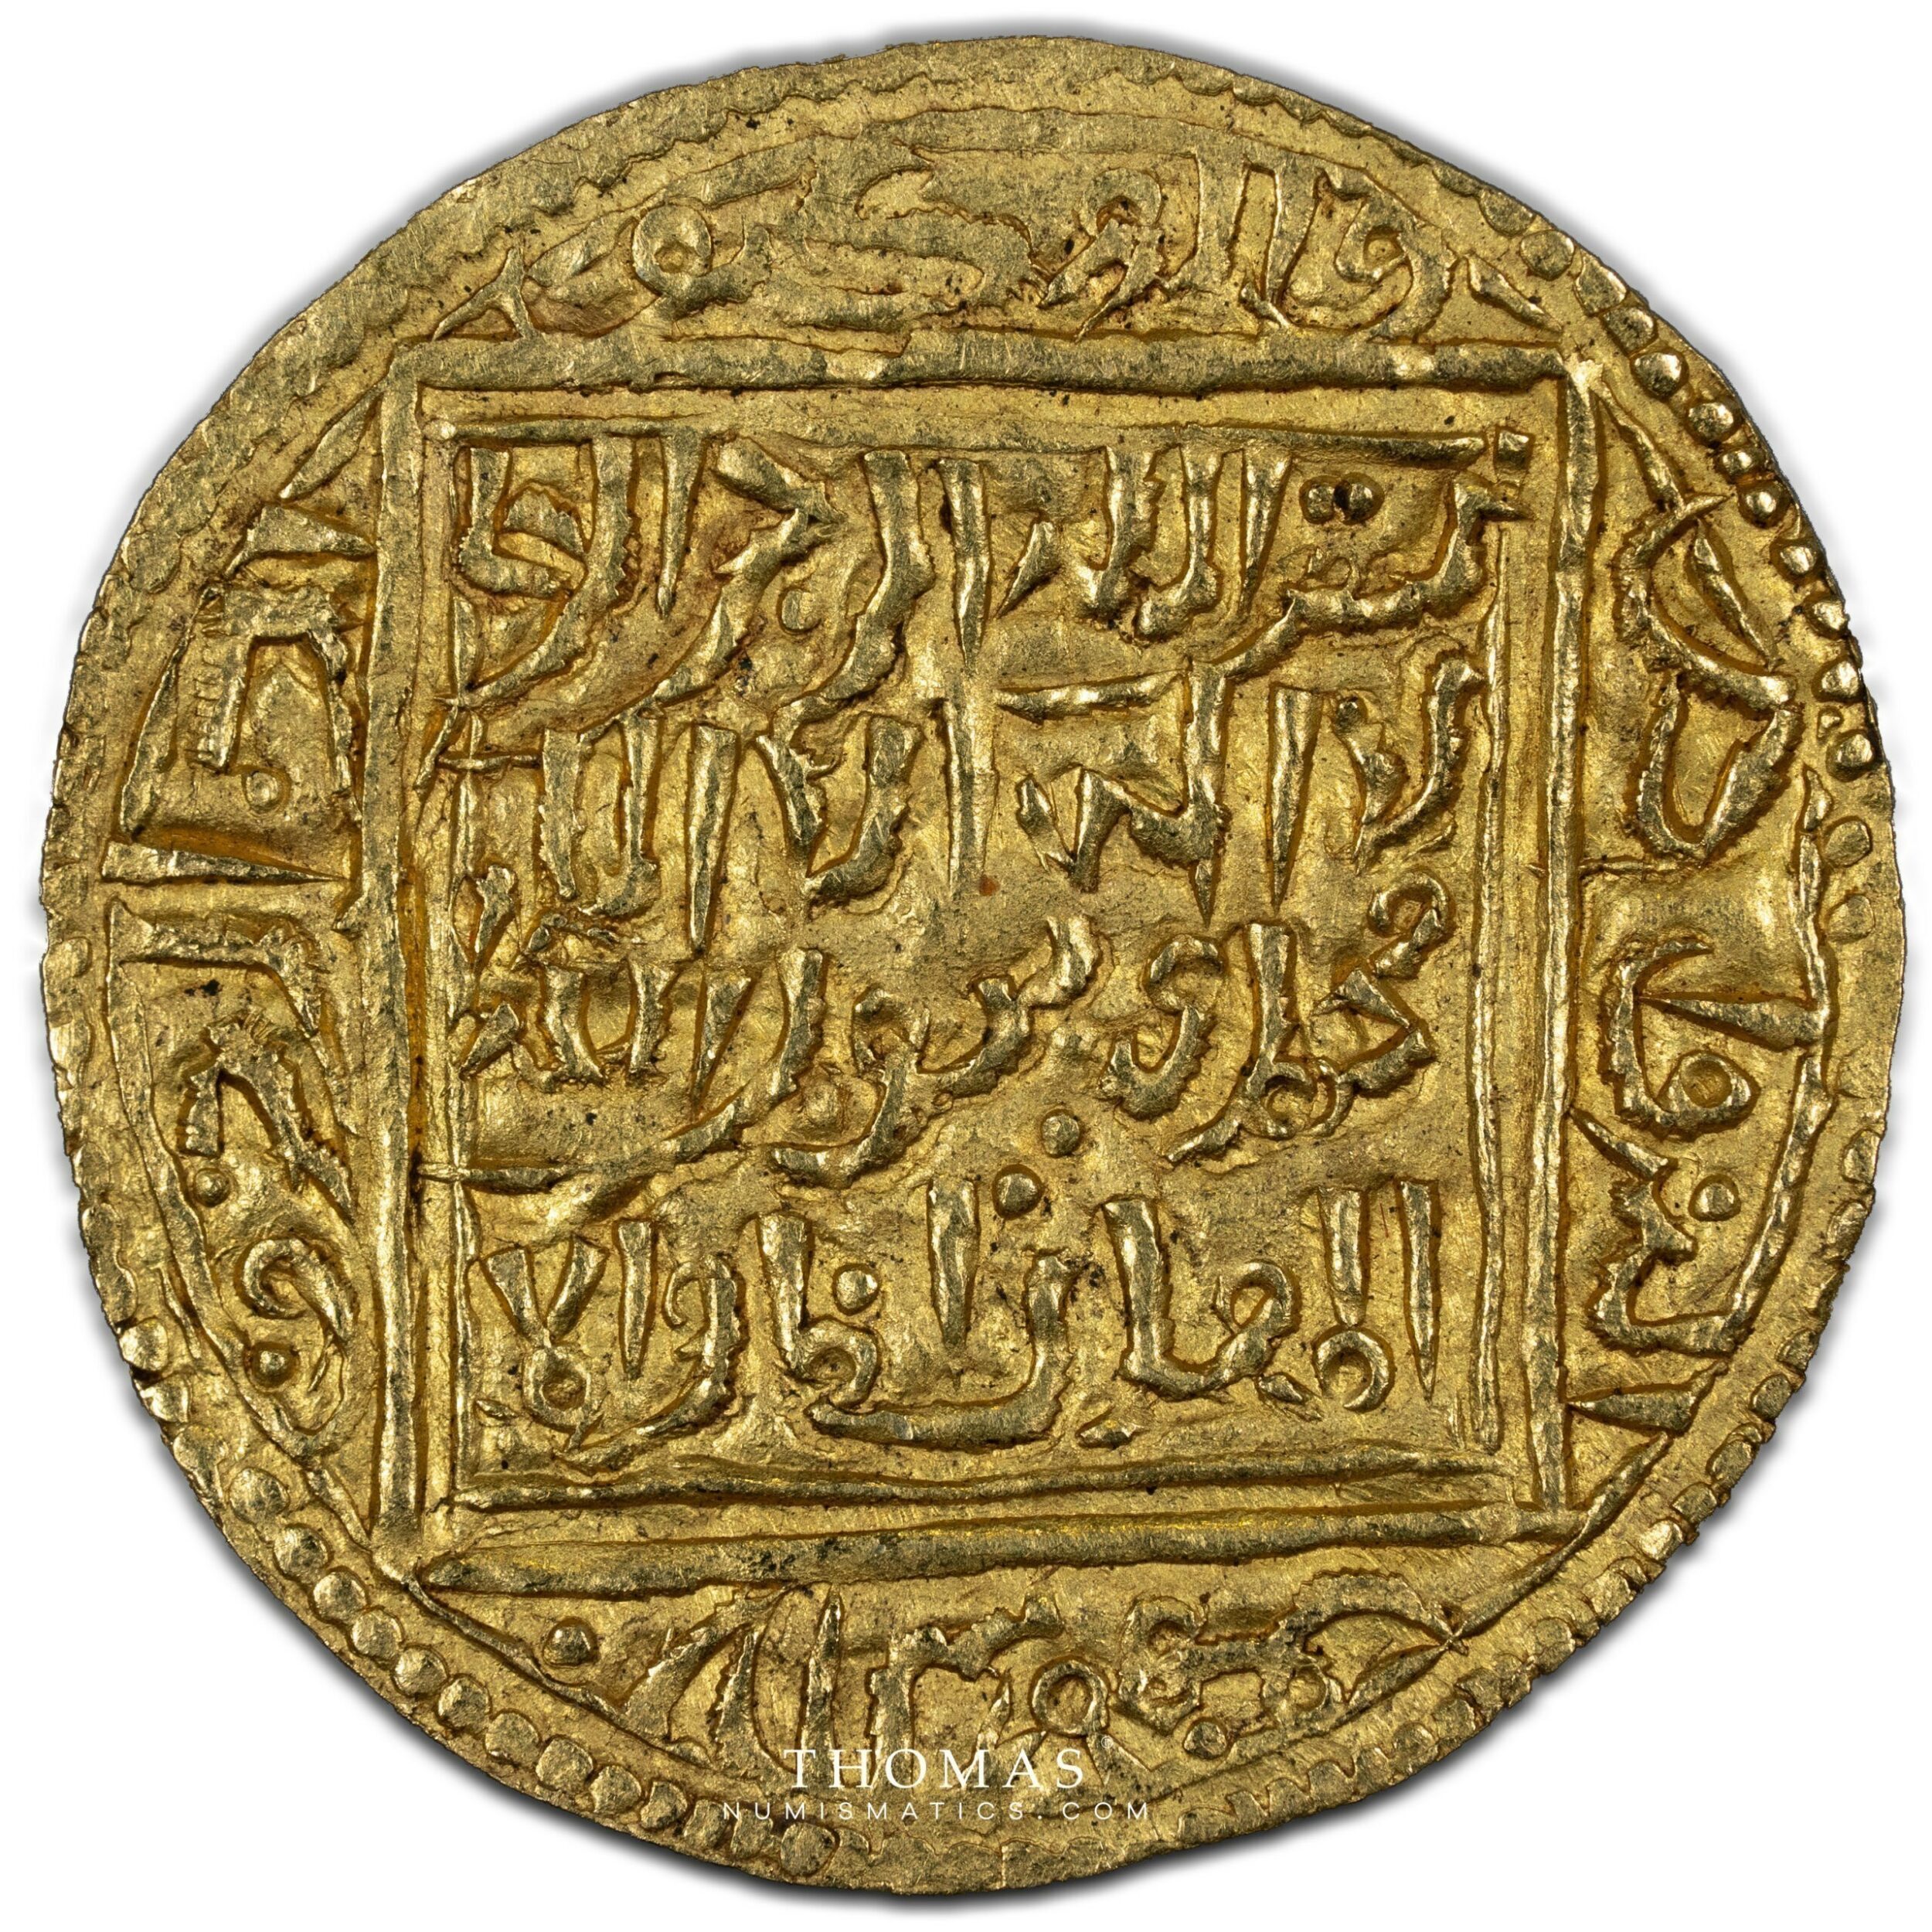 Islamic coin - Abu Yaqub Yusuf - 1/2 Dinar gold - Thomas Numismatics